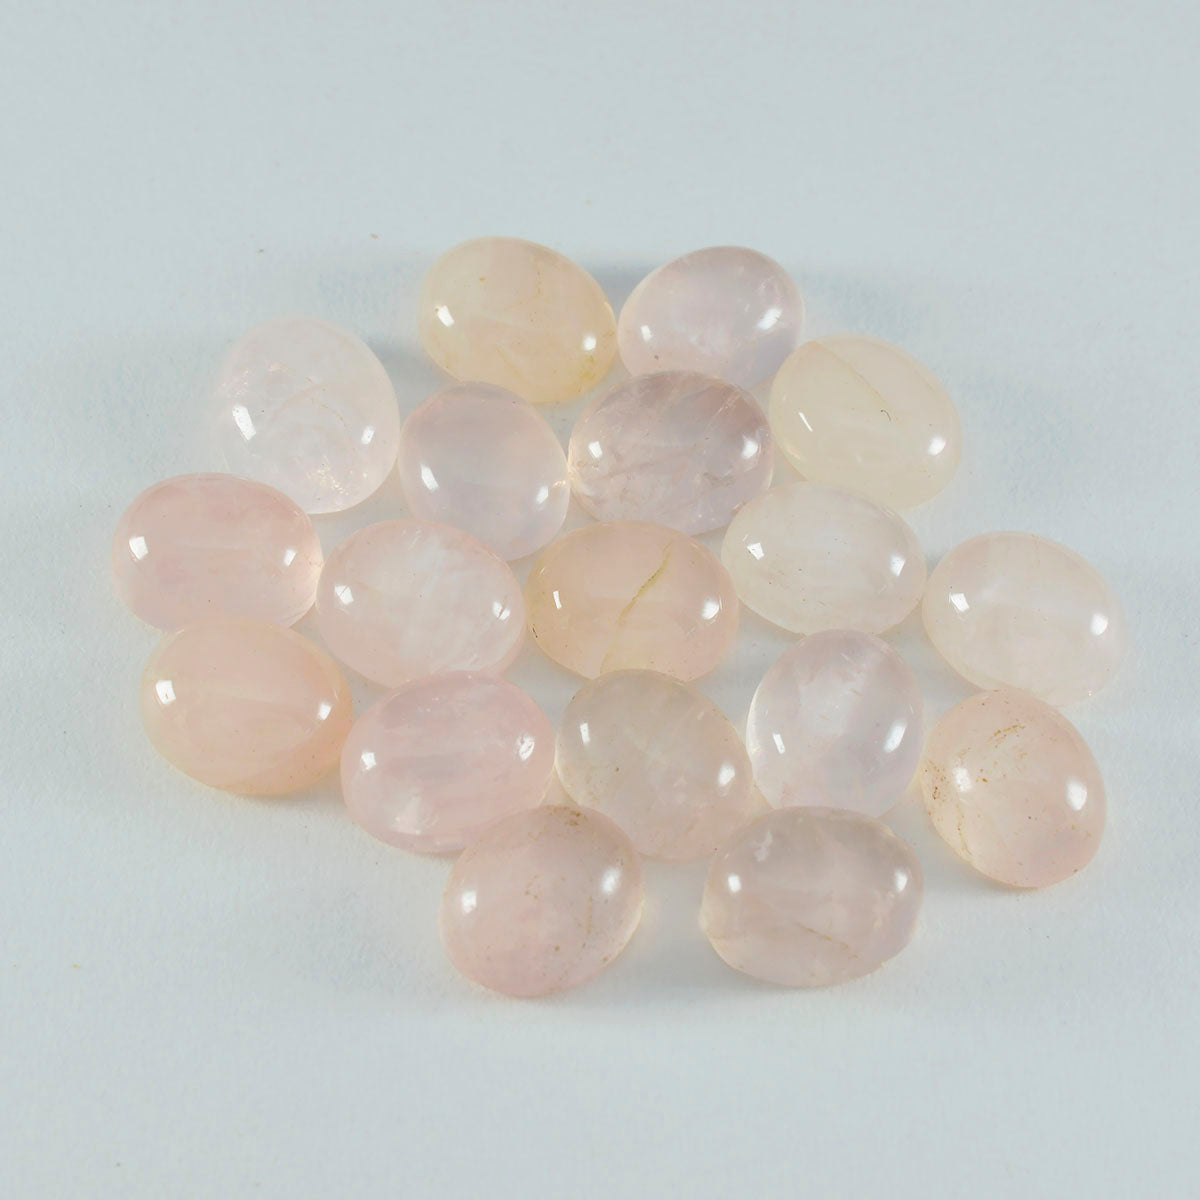 Riyogems 1PC Pink Rose Quartz Cabochon 5x7 mm Oval Shape astonishing Quality Gemstone